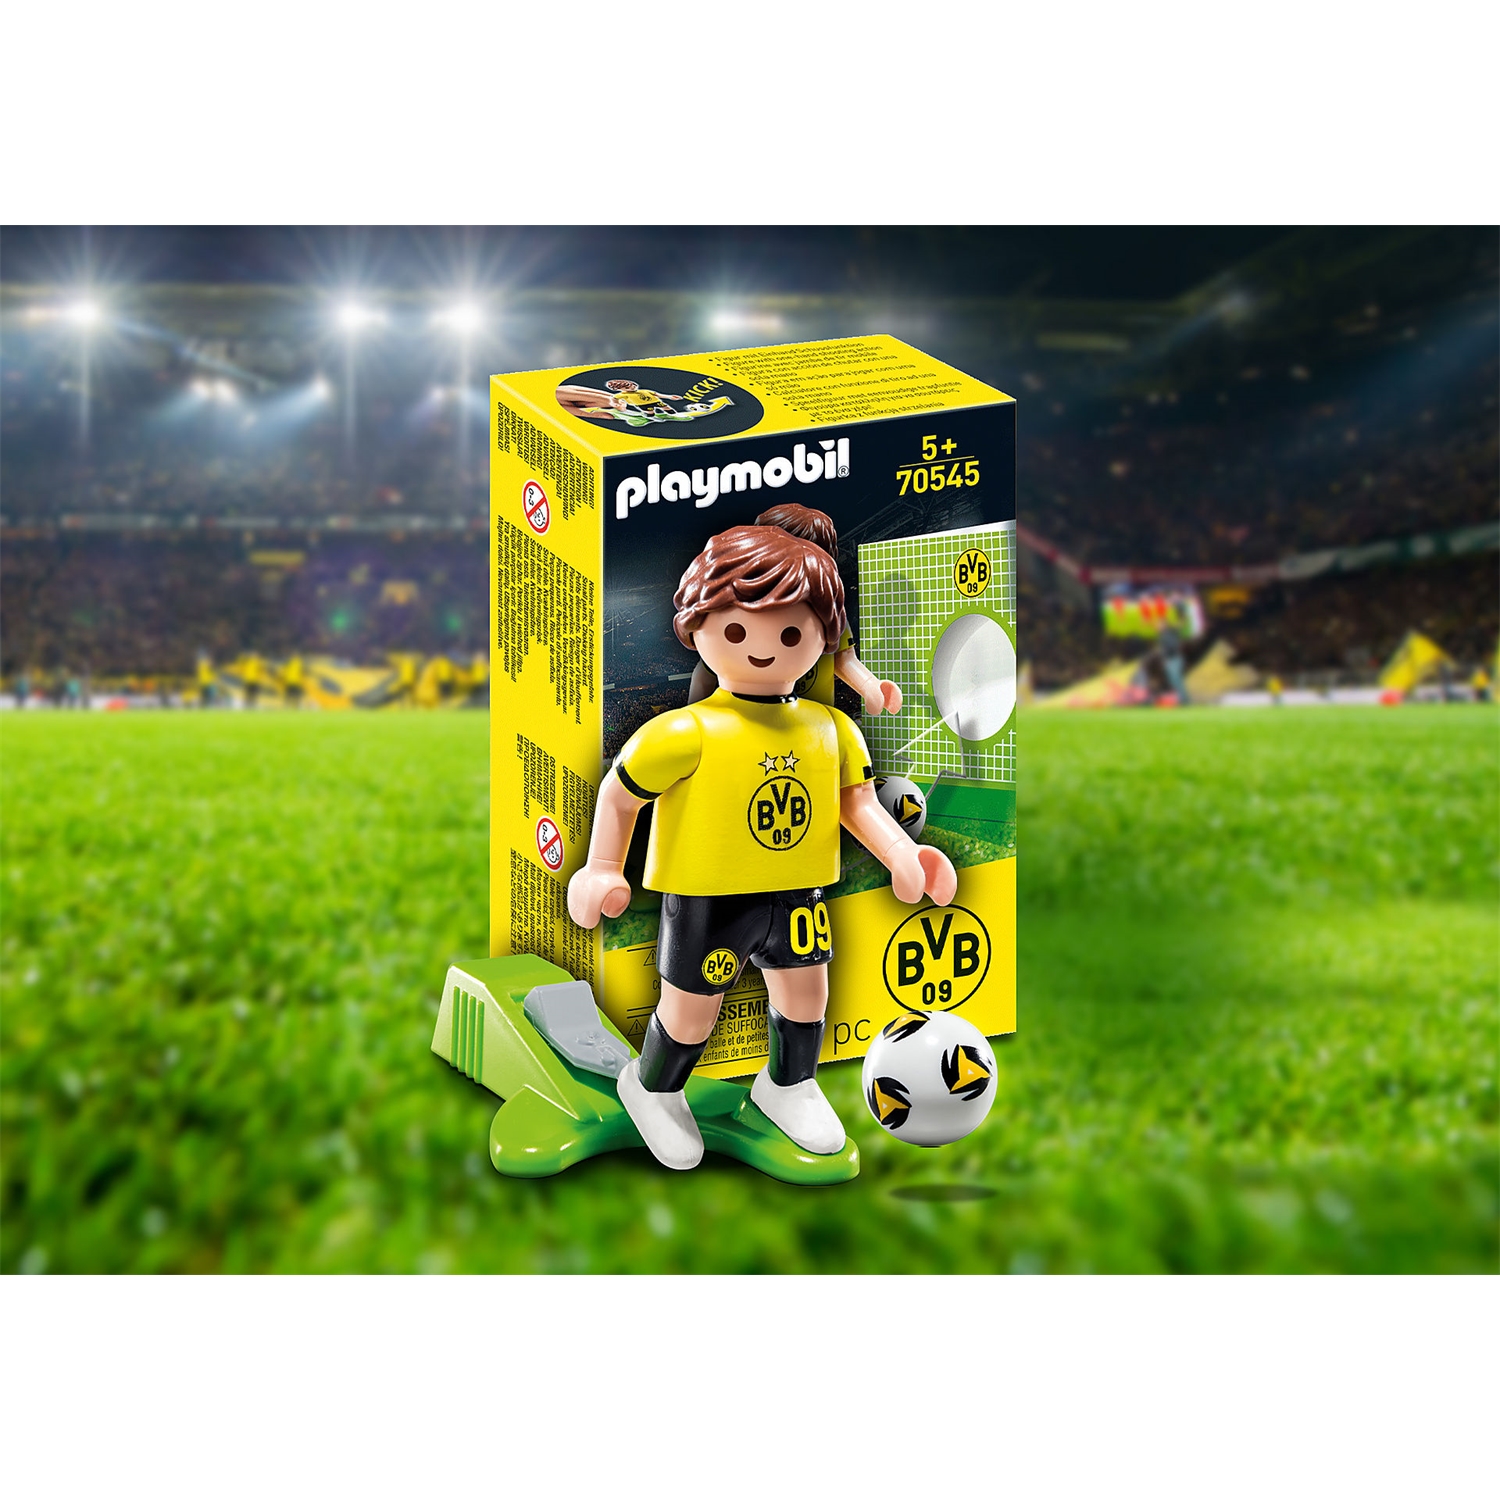 Playmobil BVB 70545 70547 Neu & OVP Fussball Werbefigur Borussia Dortmund